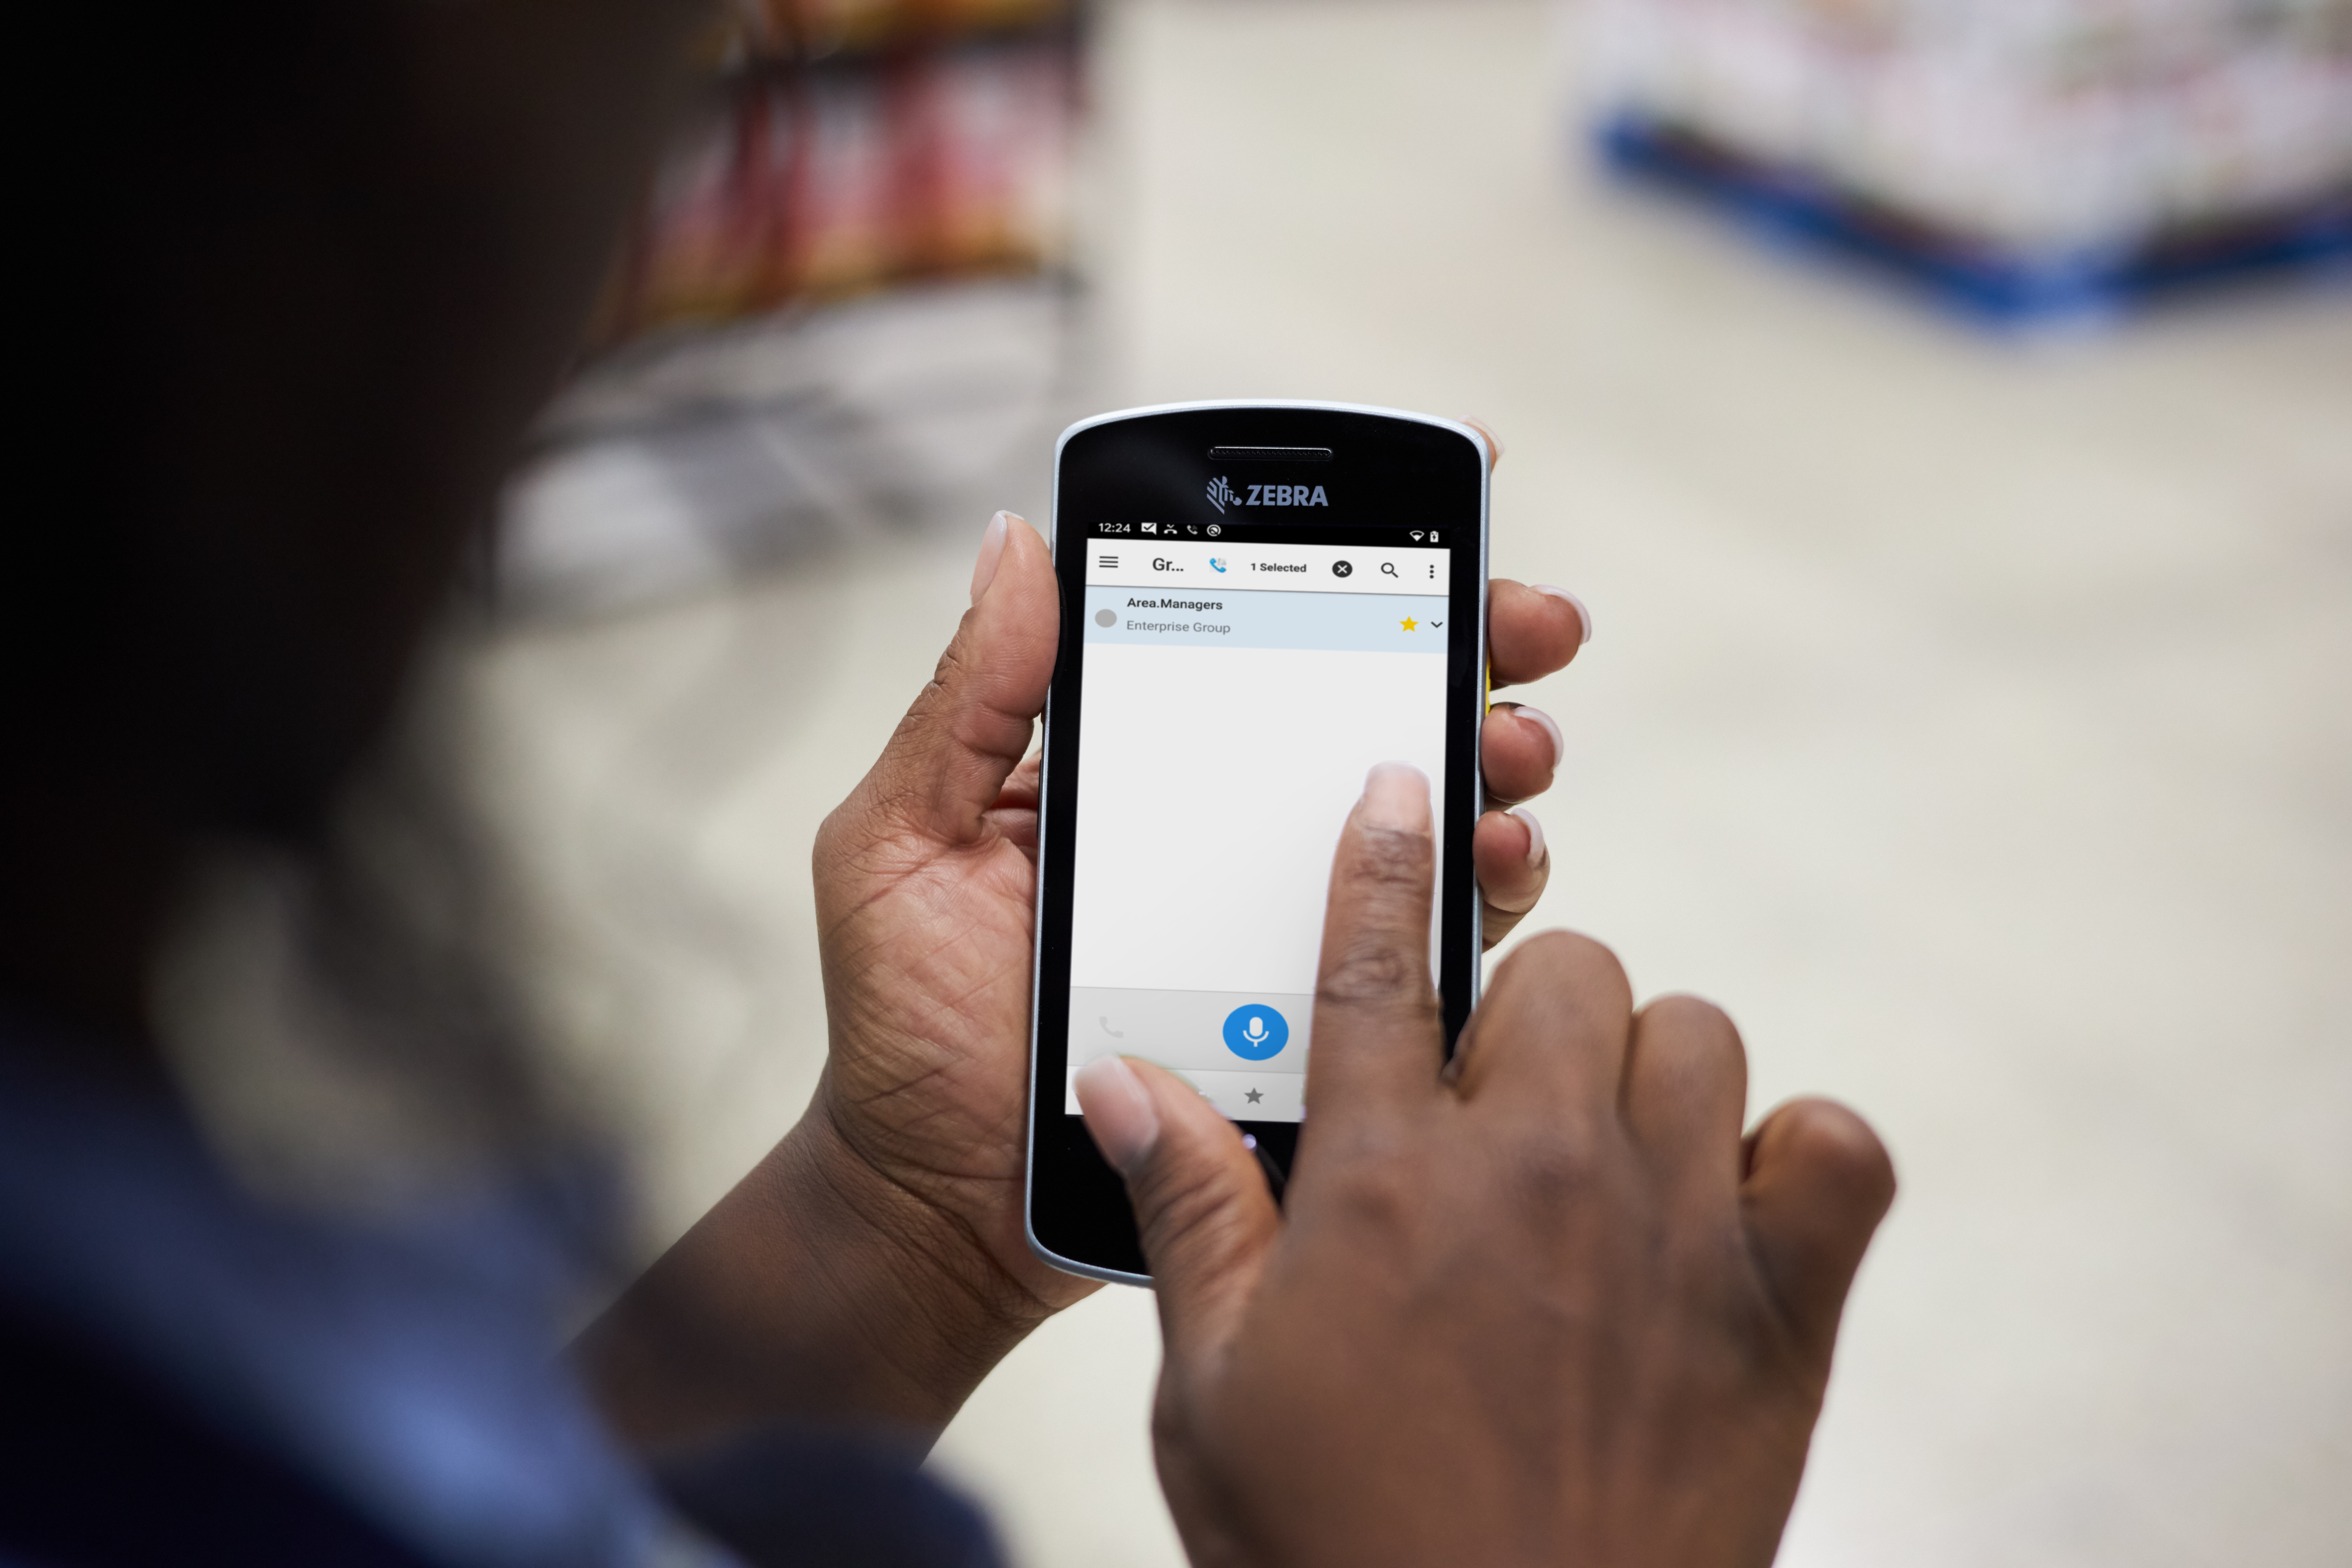 A retail worker communicates via PTT on their Zebra device